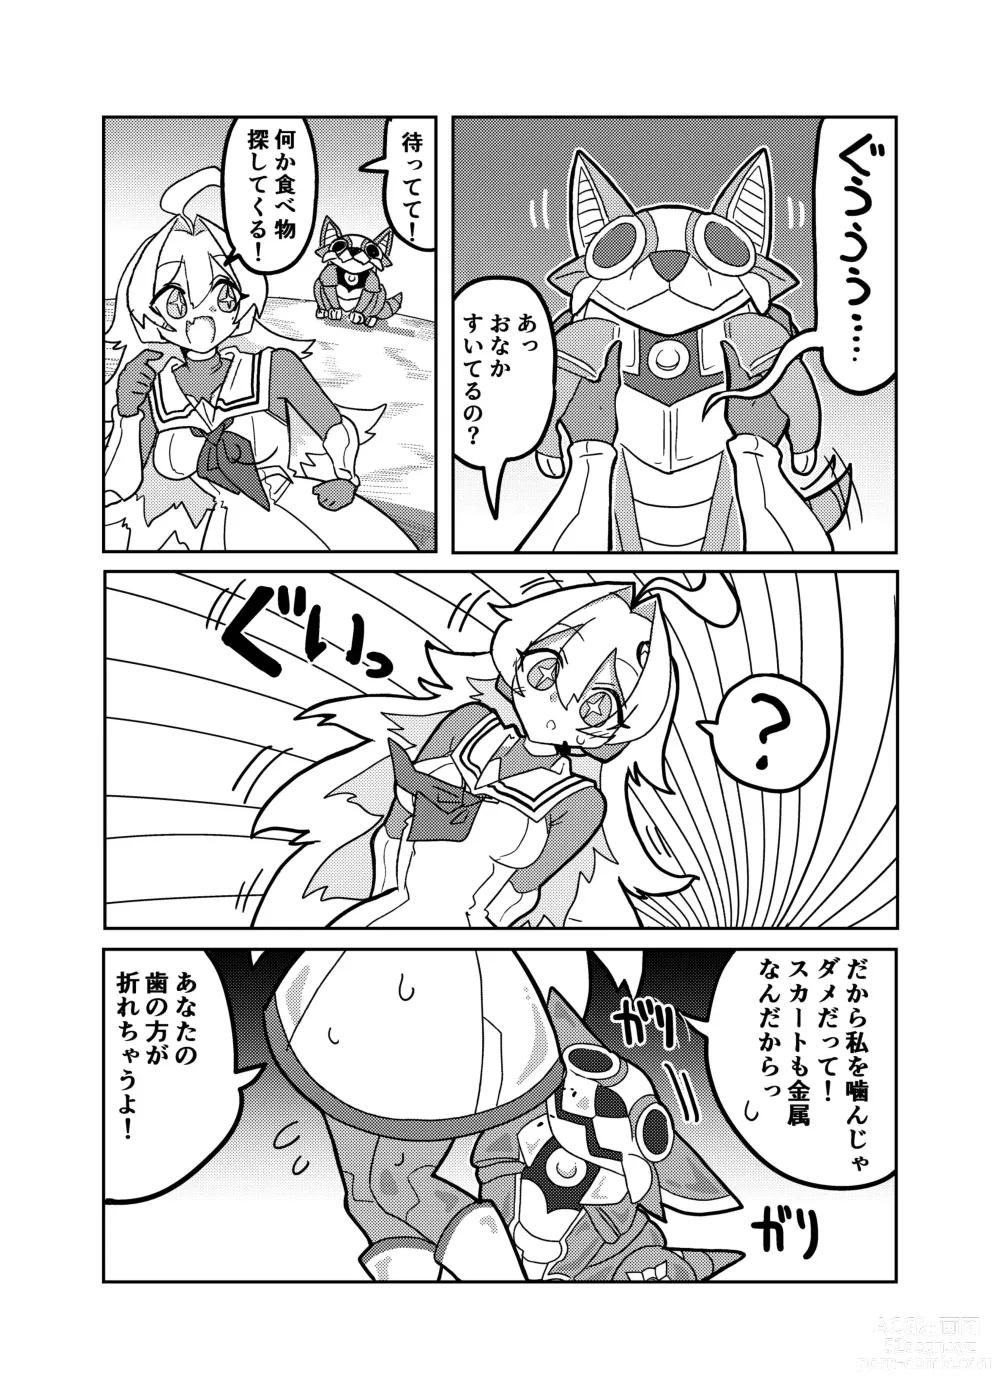 Page 7 of doujinshi Ralmia vs Robopup